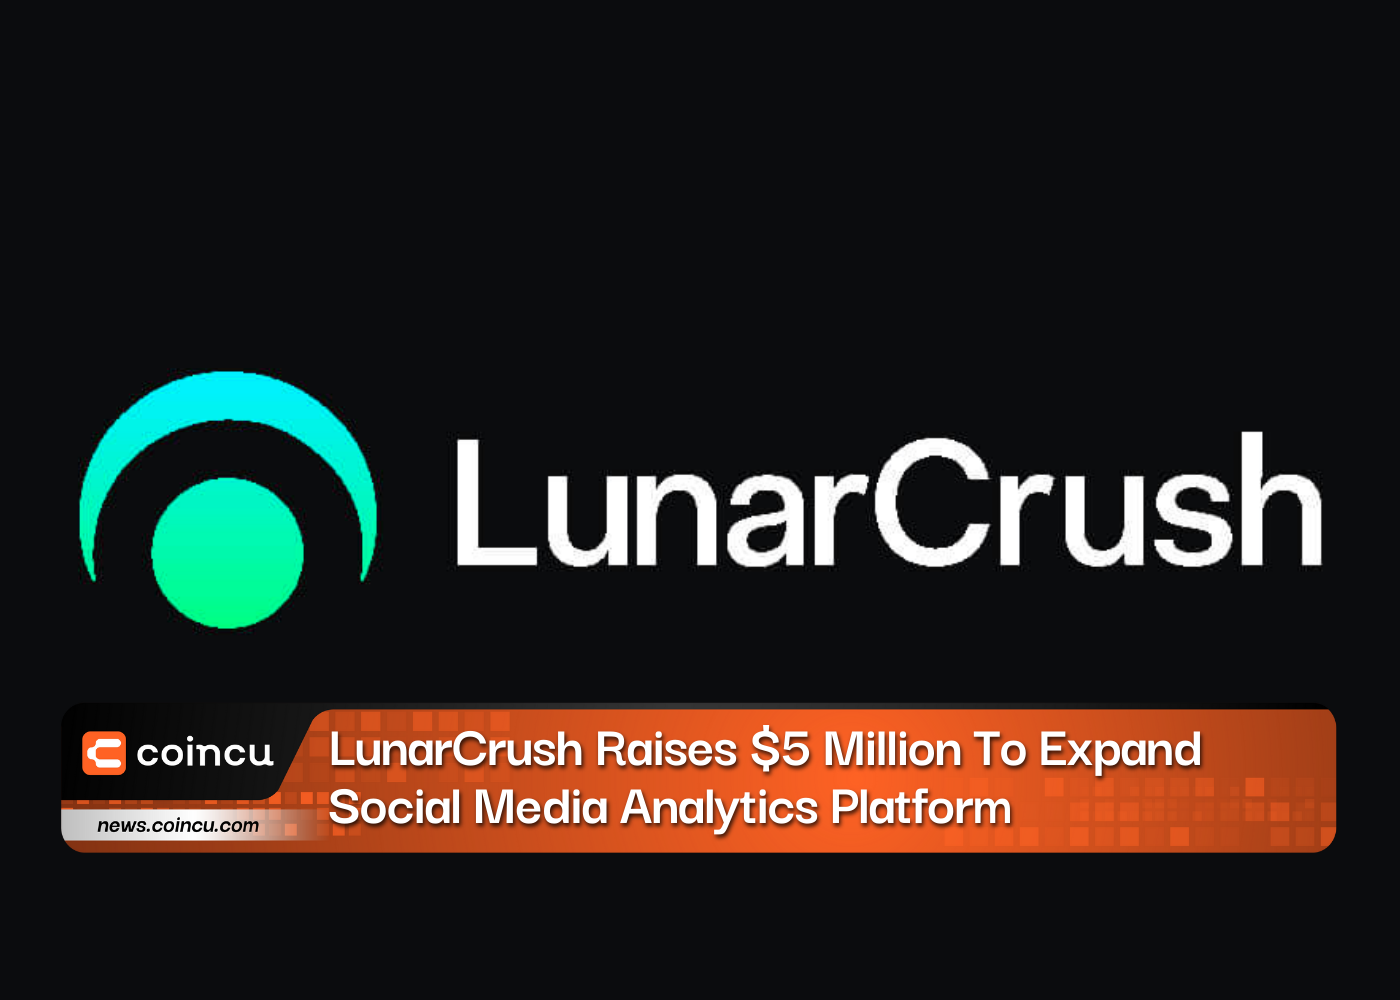 LunarCrush Raises $5 Million To Expand Social Media Analytics Platform